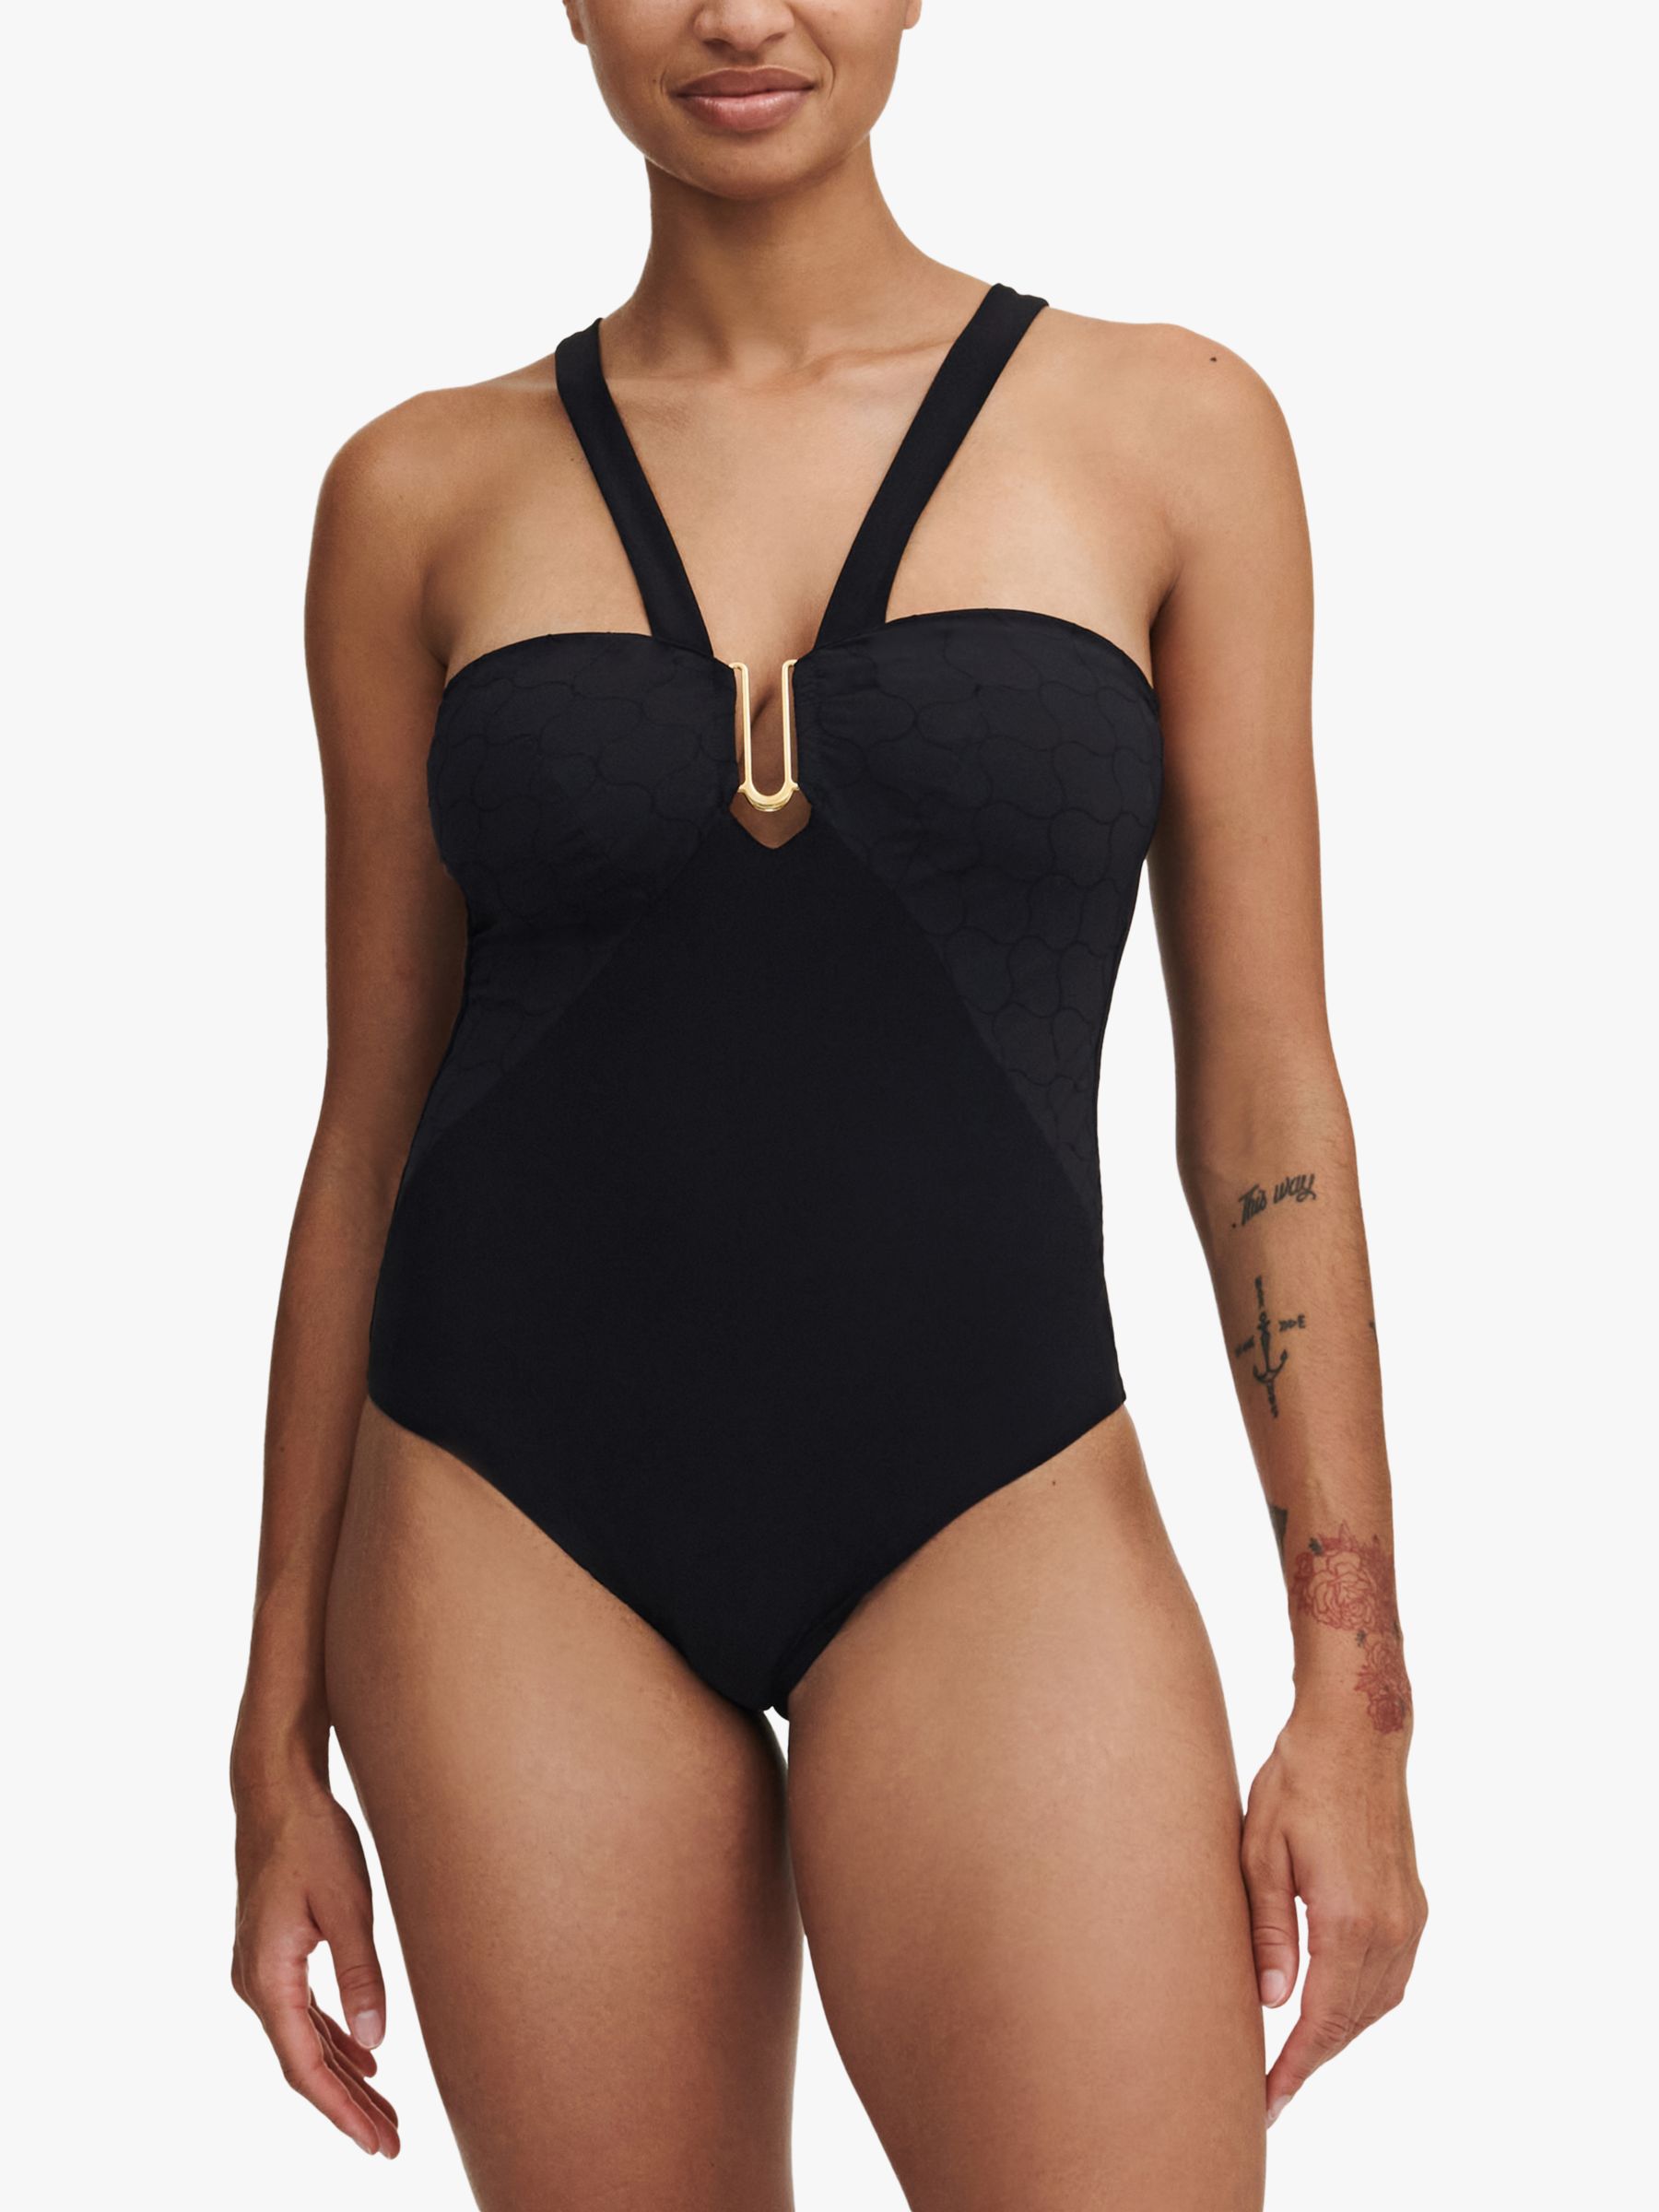 Chantelle Glow Wire-Free Swimsuit, Black, M